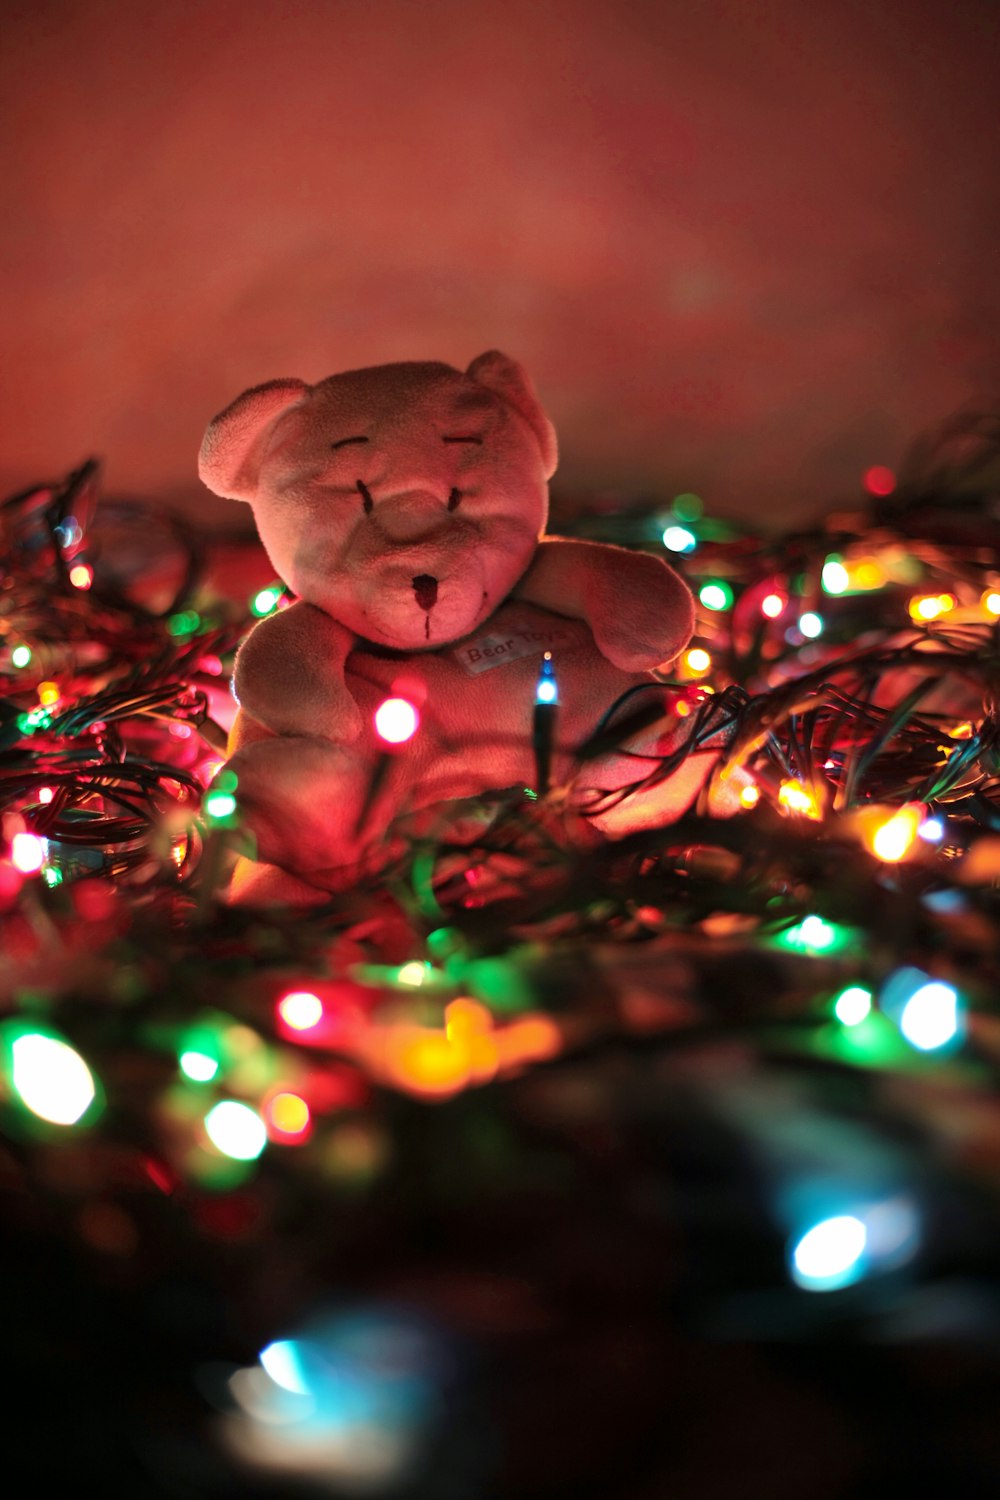 brown bear plush toy on christmas tree